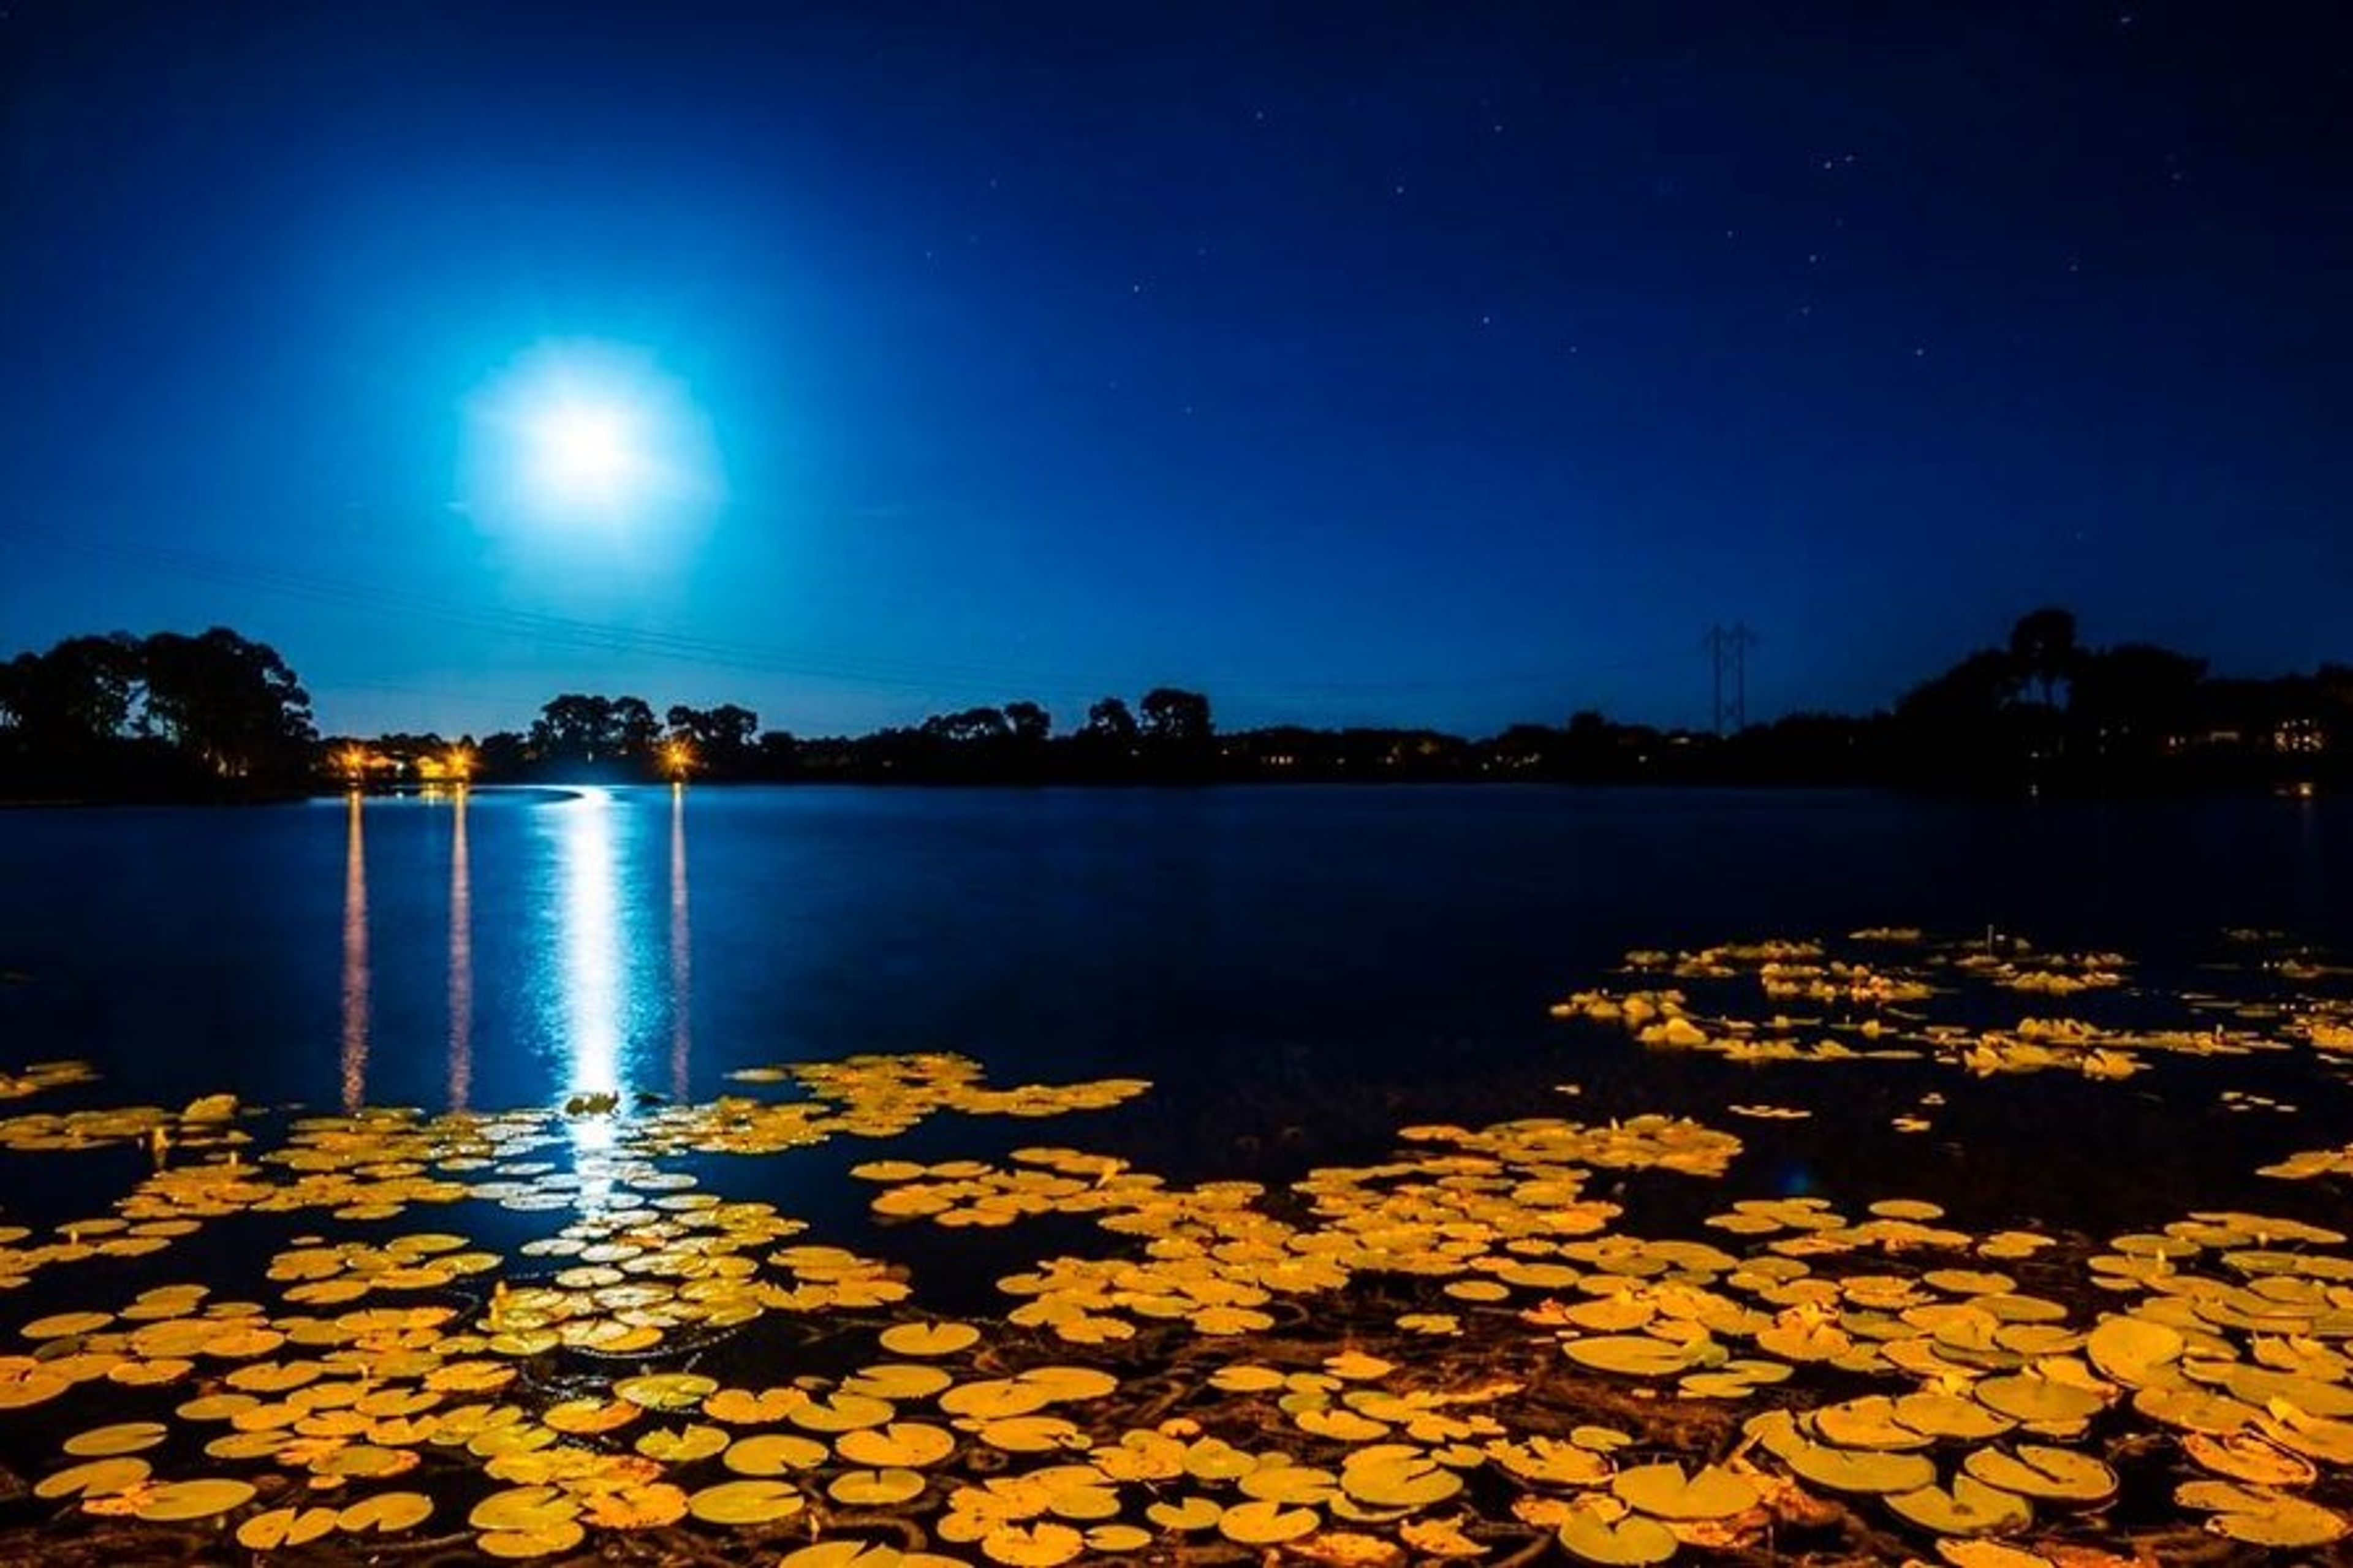 Moonlight dancing across Lake Thomas